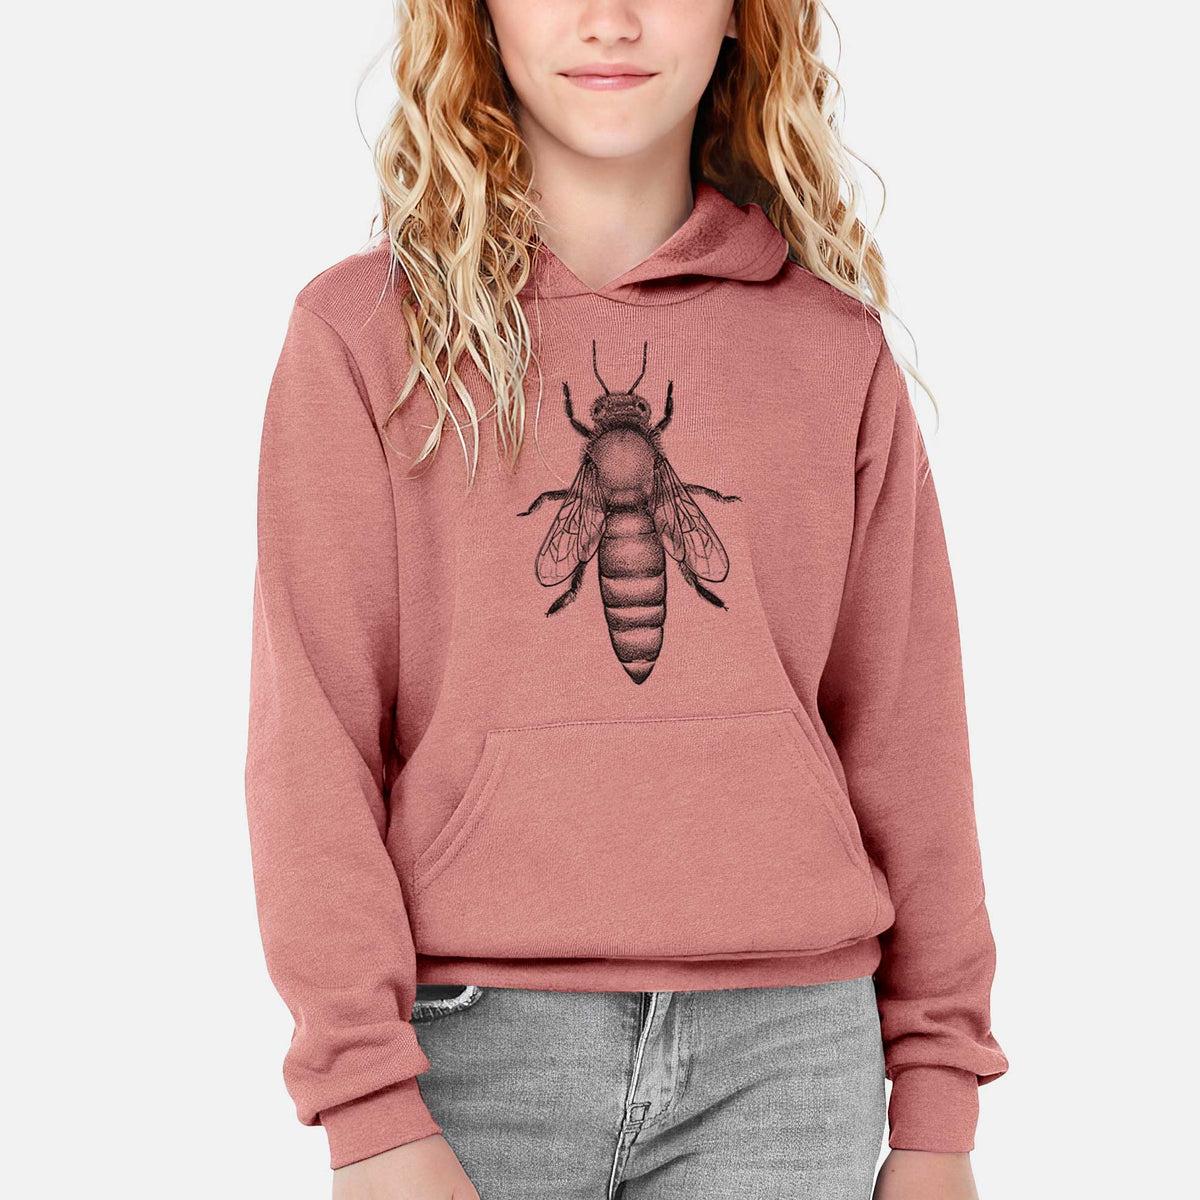 Queen Bee Apis Mellifera - Youth Hoodie Sweatshirt